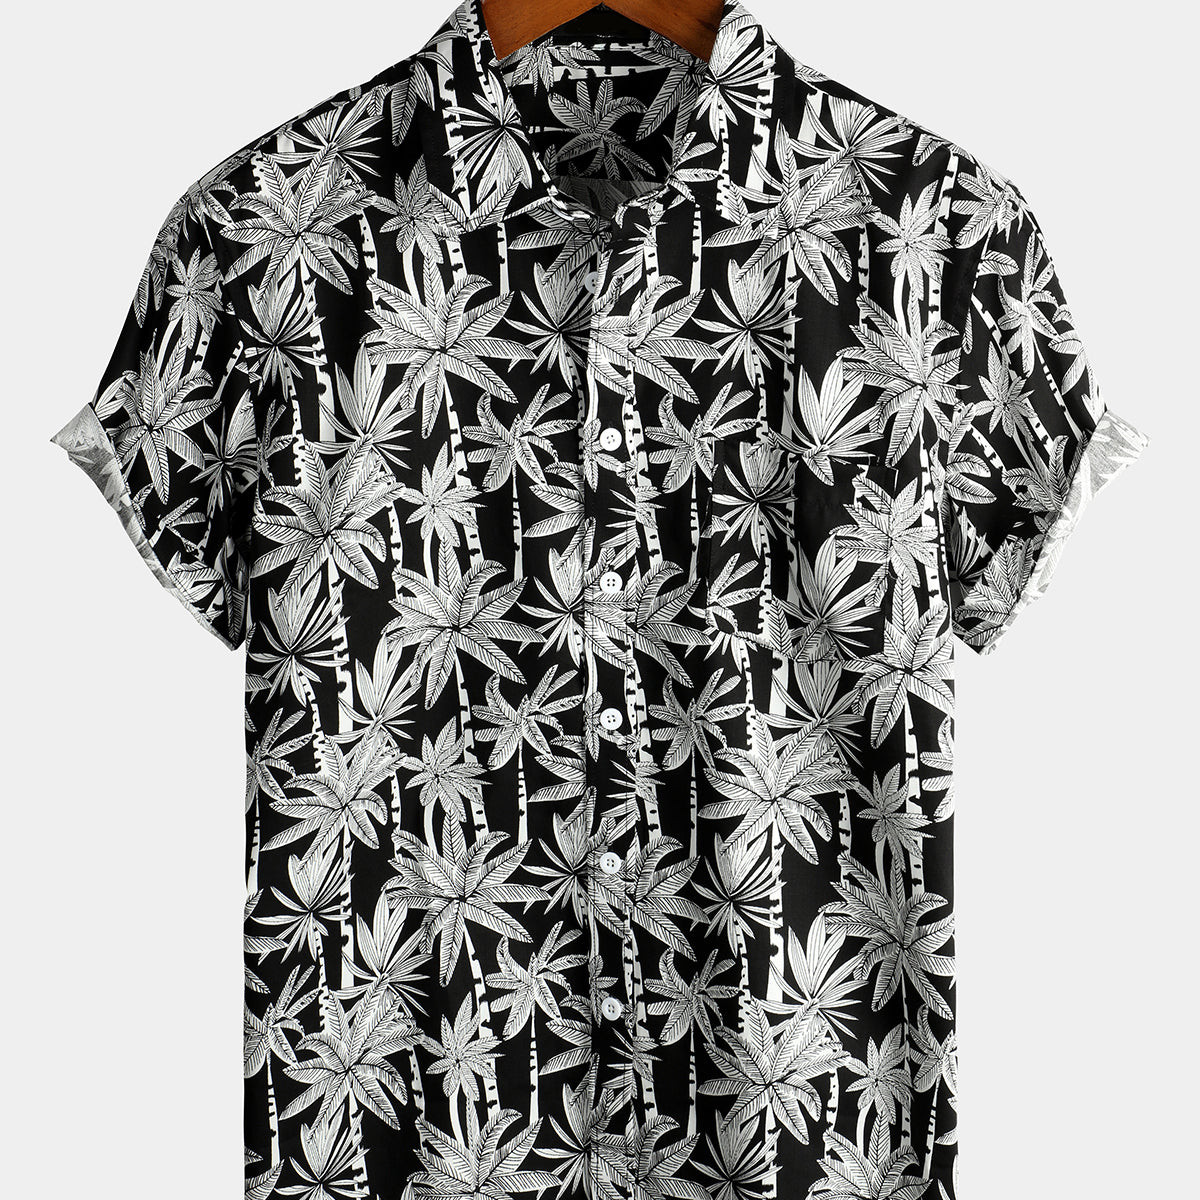 Men's Casual Hawaiian Short Sleeve Cotton Shirt